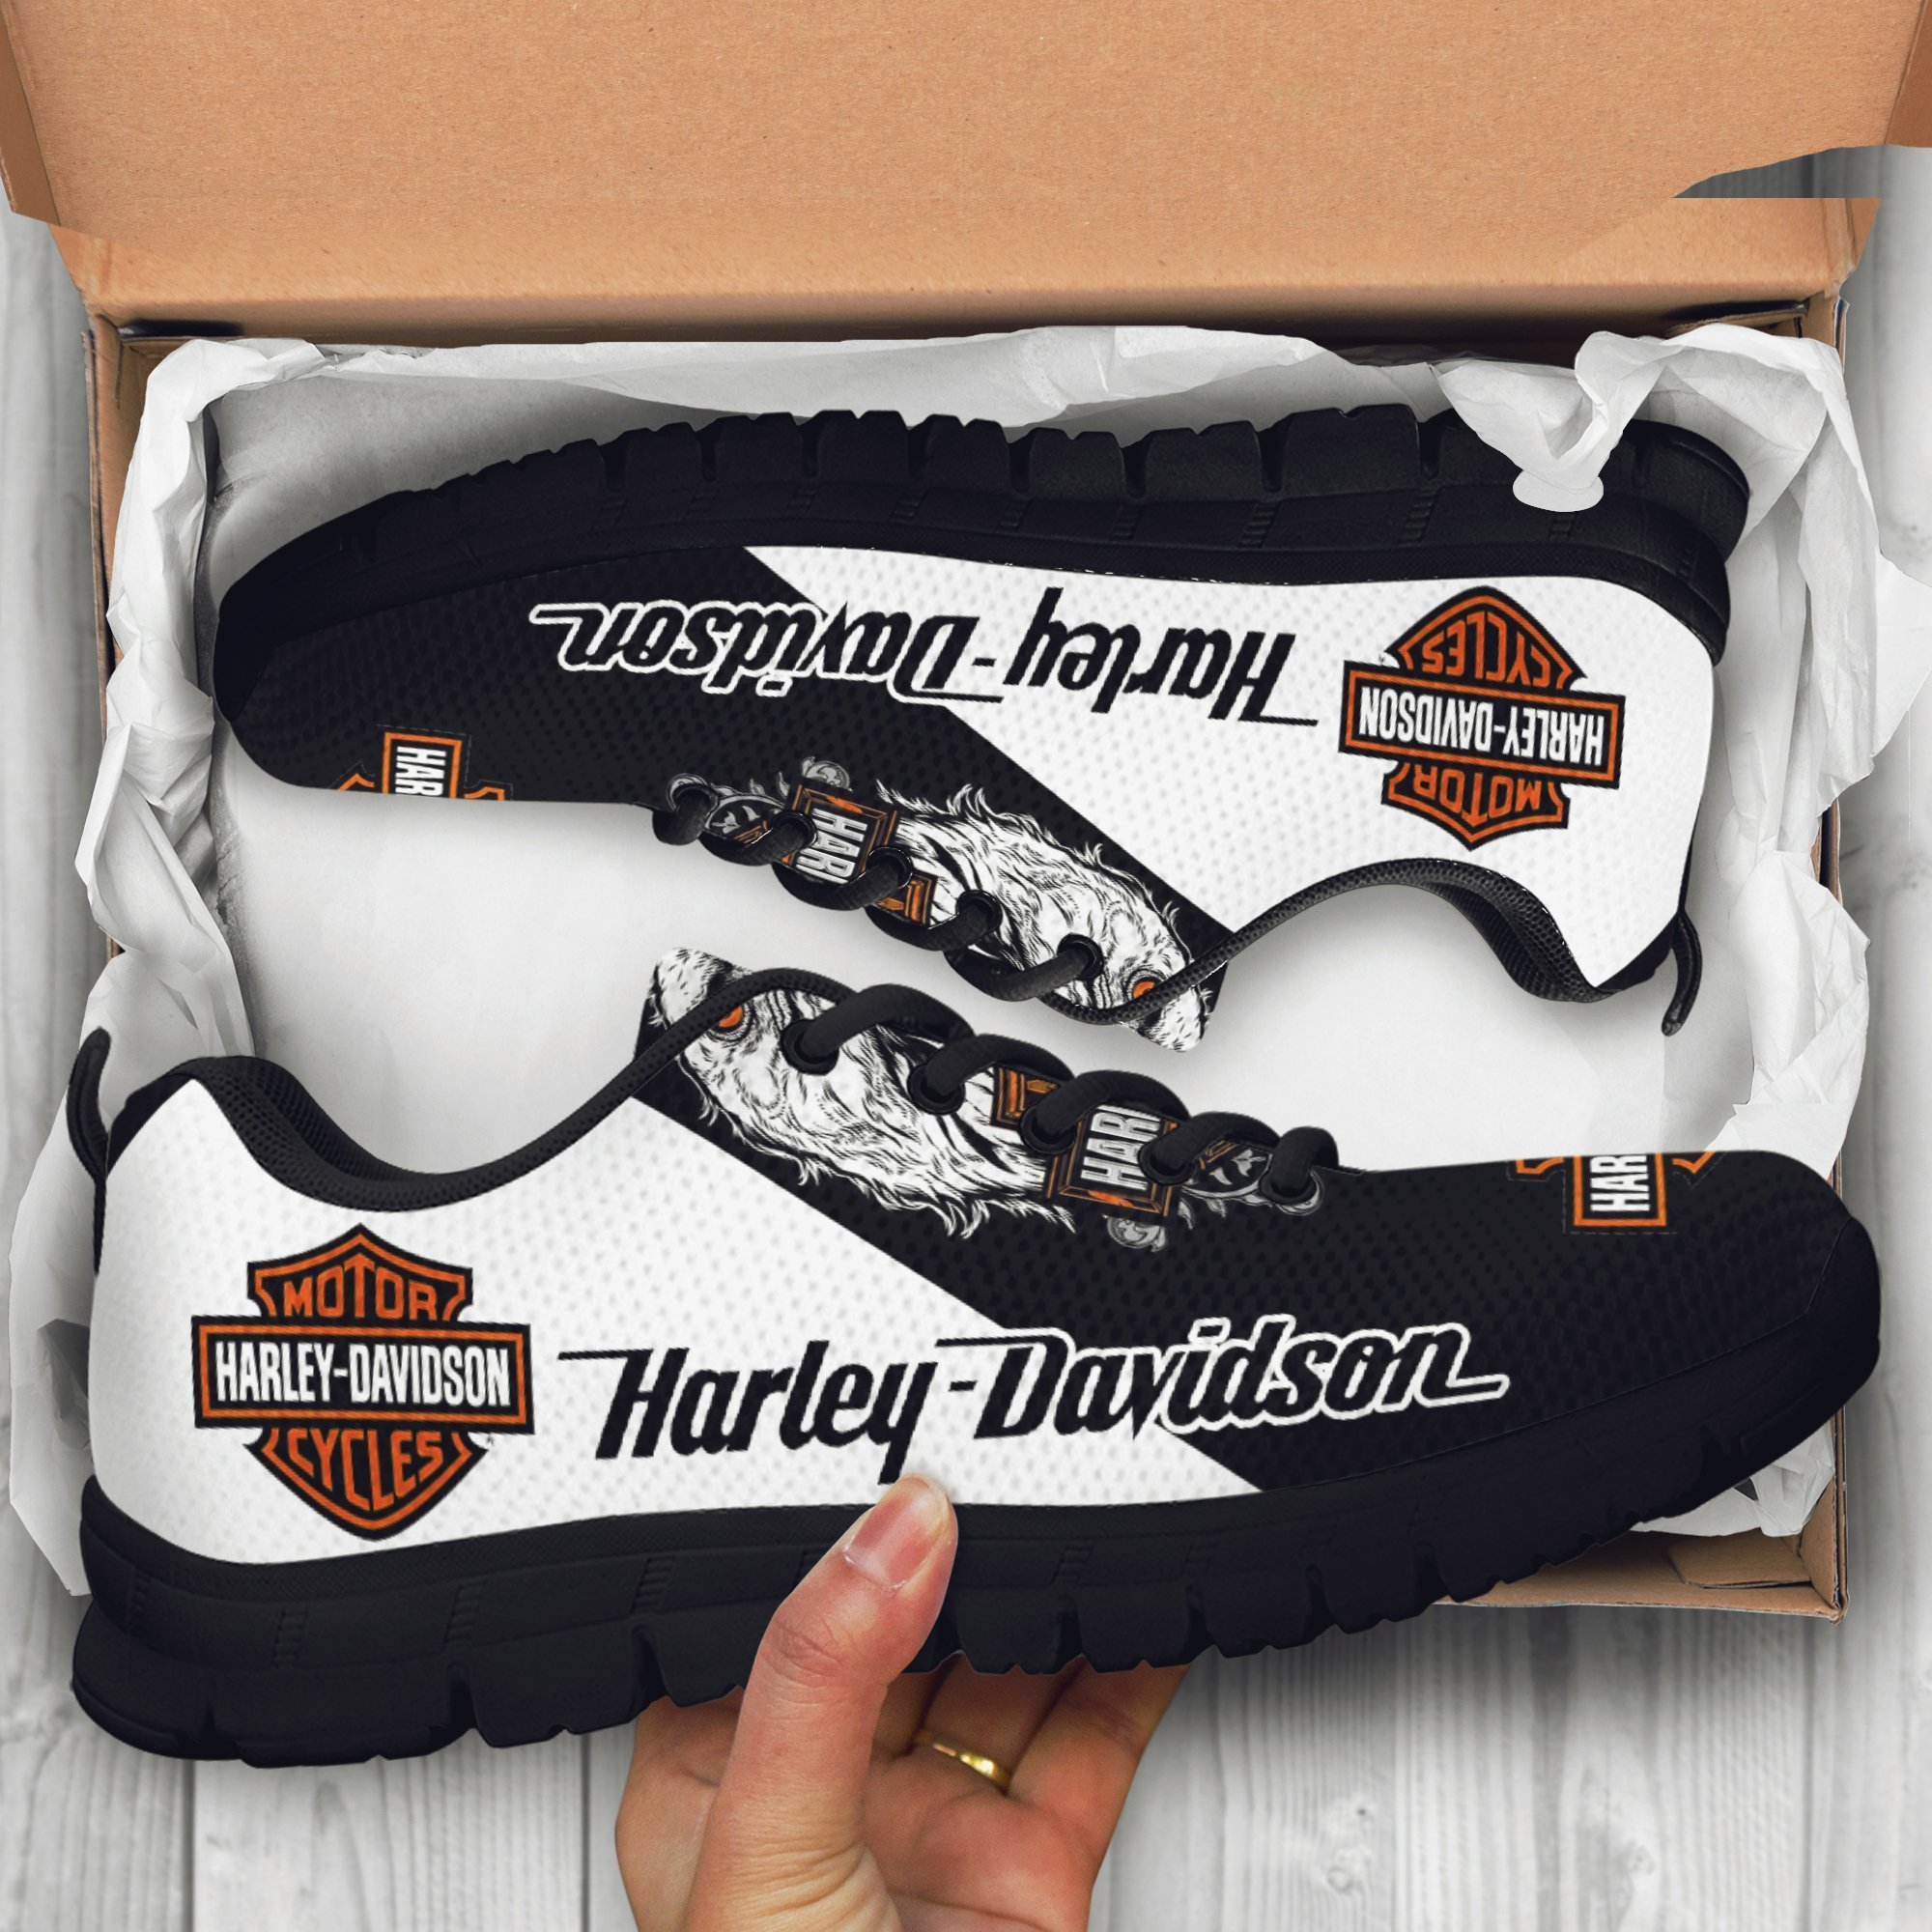 Harley Davidson Shoes Harley Davidson Sporty Shoes -